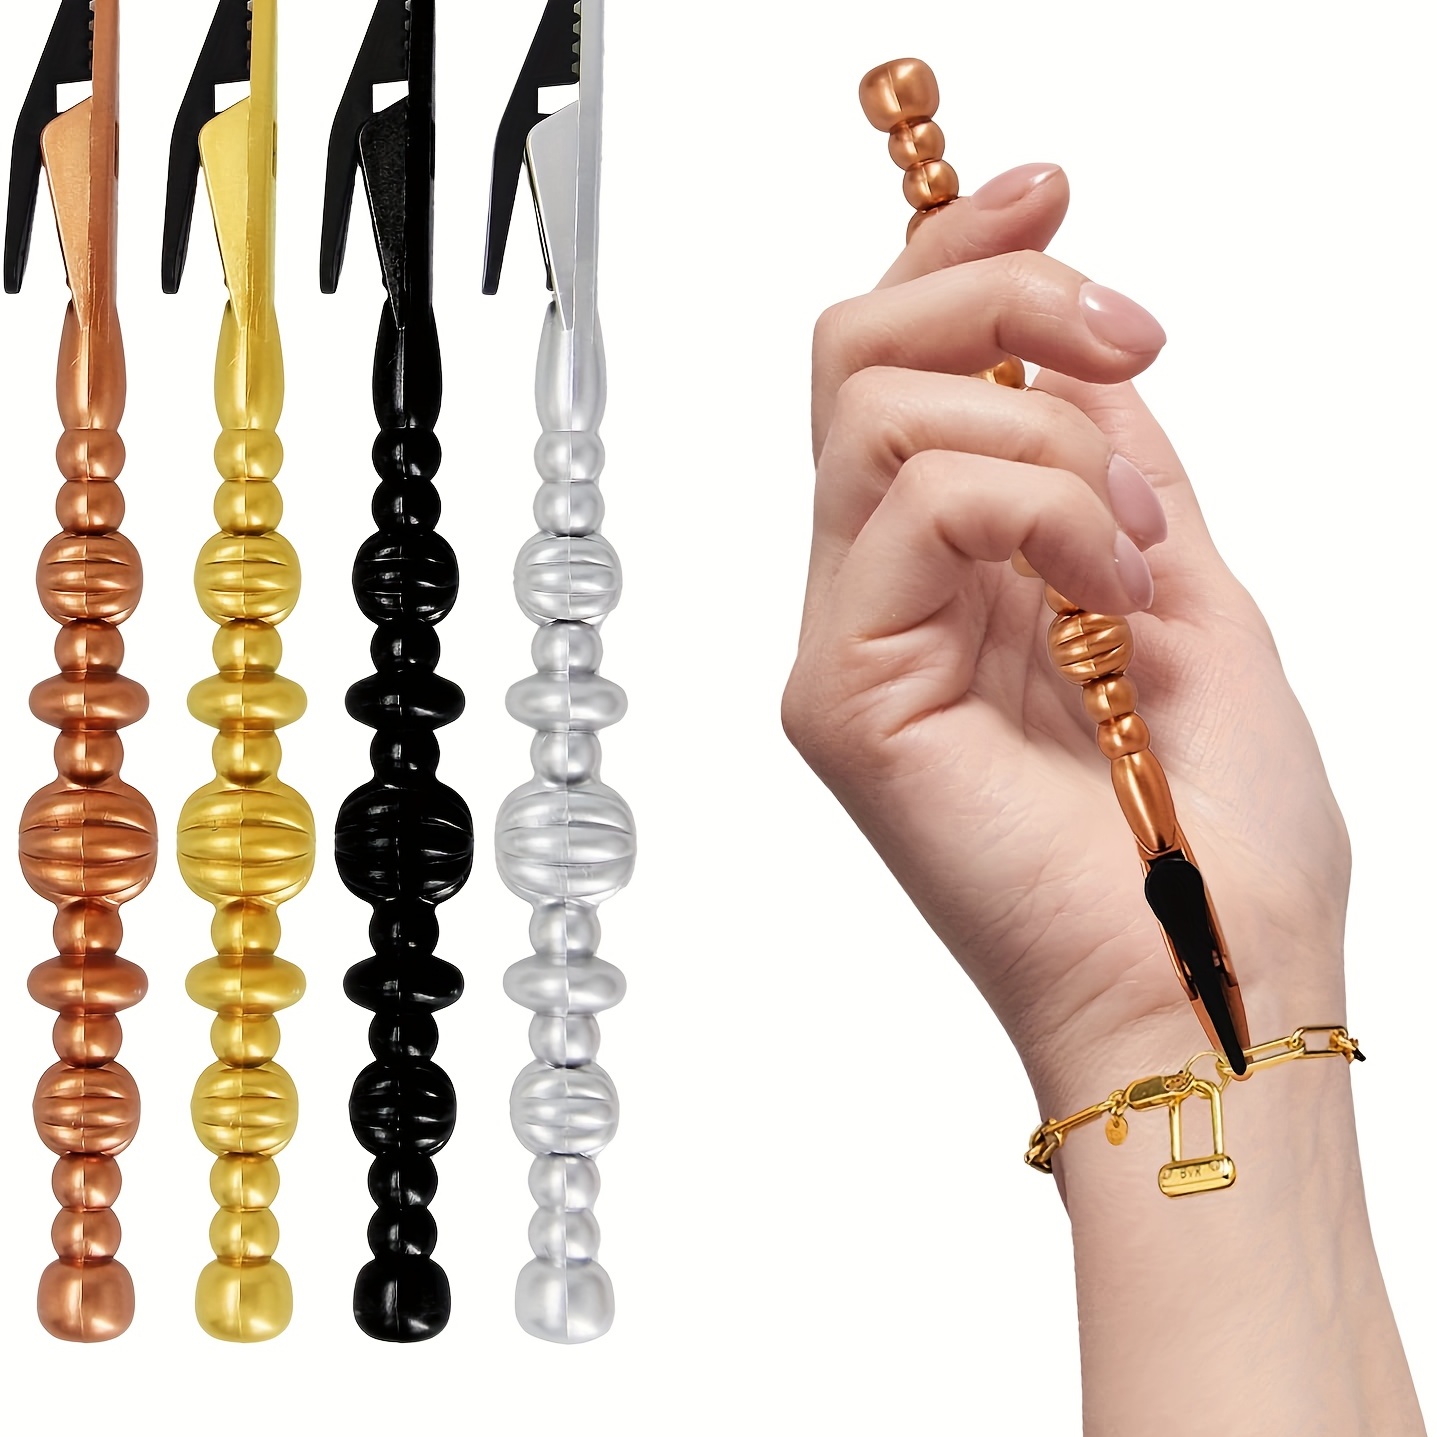 Bracelet Helper Jewelry Buddy Tools Gadgets for Women Offer Connecting to  Wrist Bracelets (Silver) 